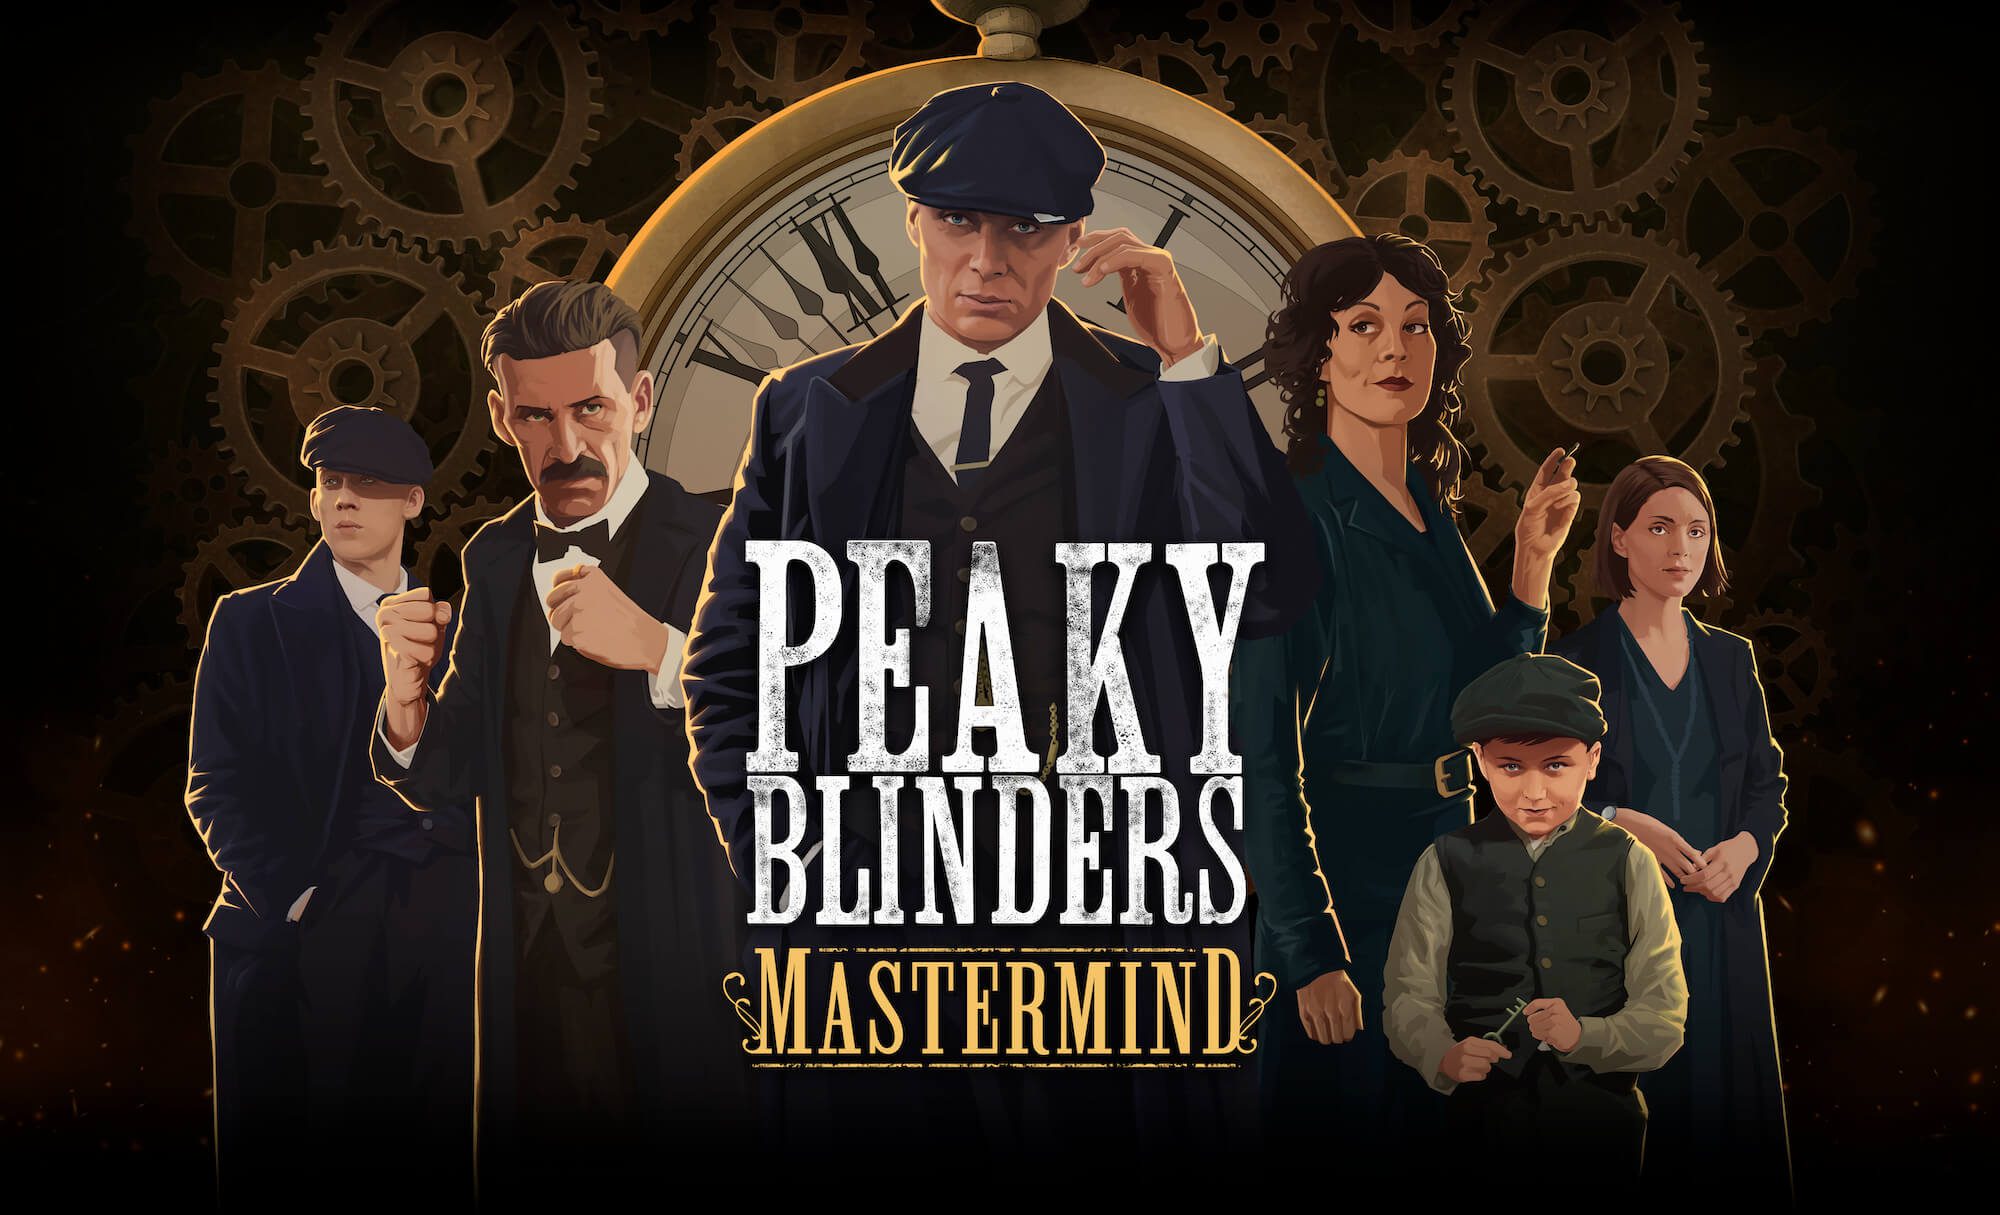 Poster of the British series, Peaky Blinders